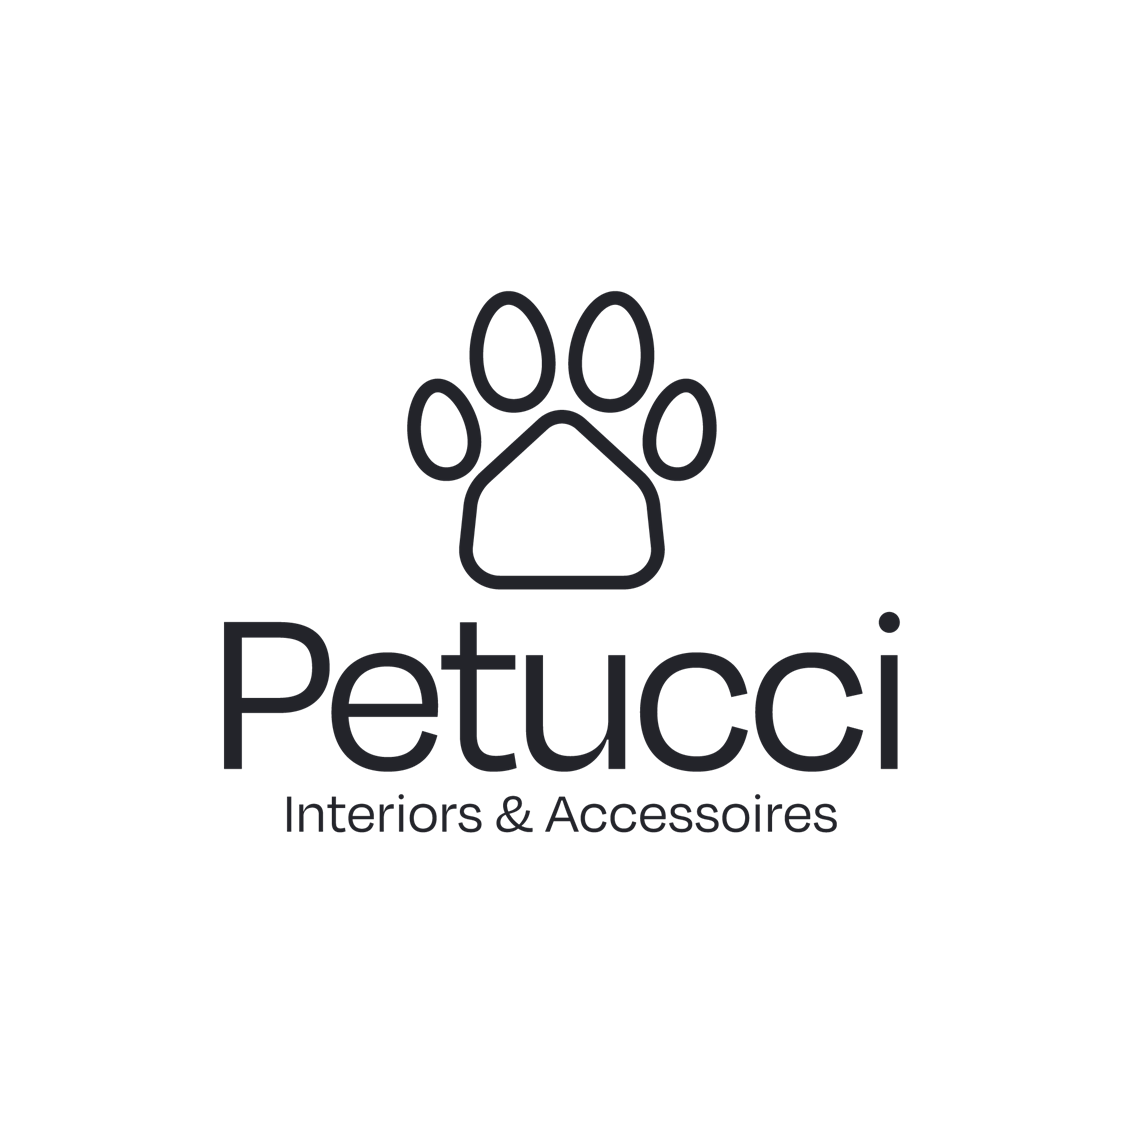 Direktvermarkter: Logo - Petucci Interiors & Accessoiries